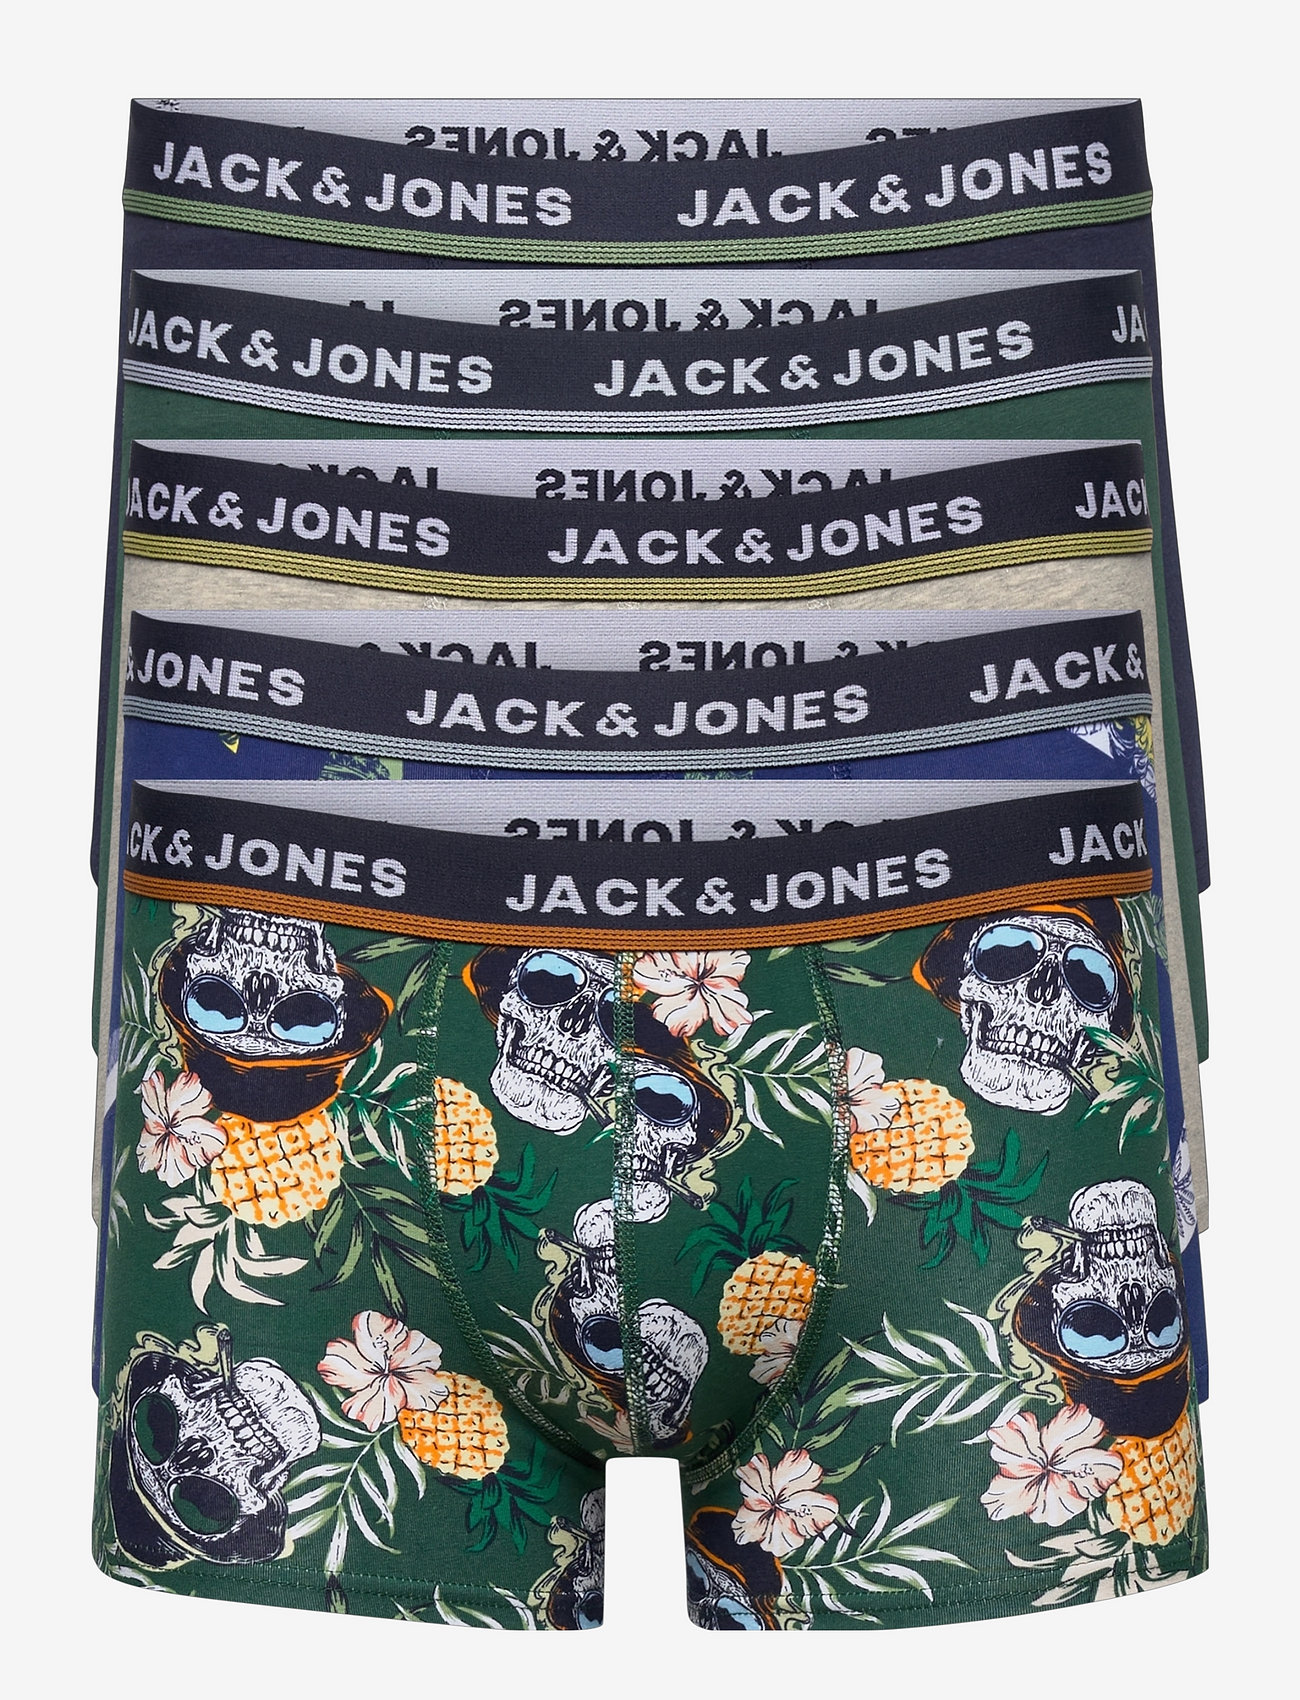 Jack & Jones Jacriver Trunks 5 Pack - Boxers | Boozt.com